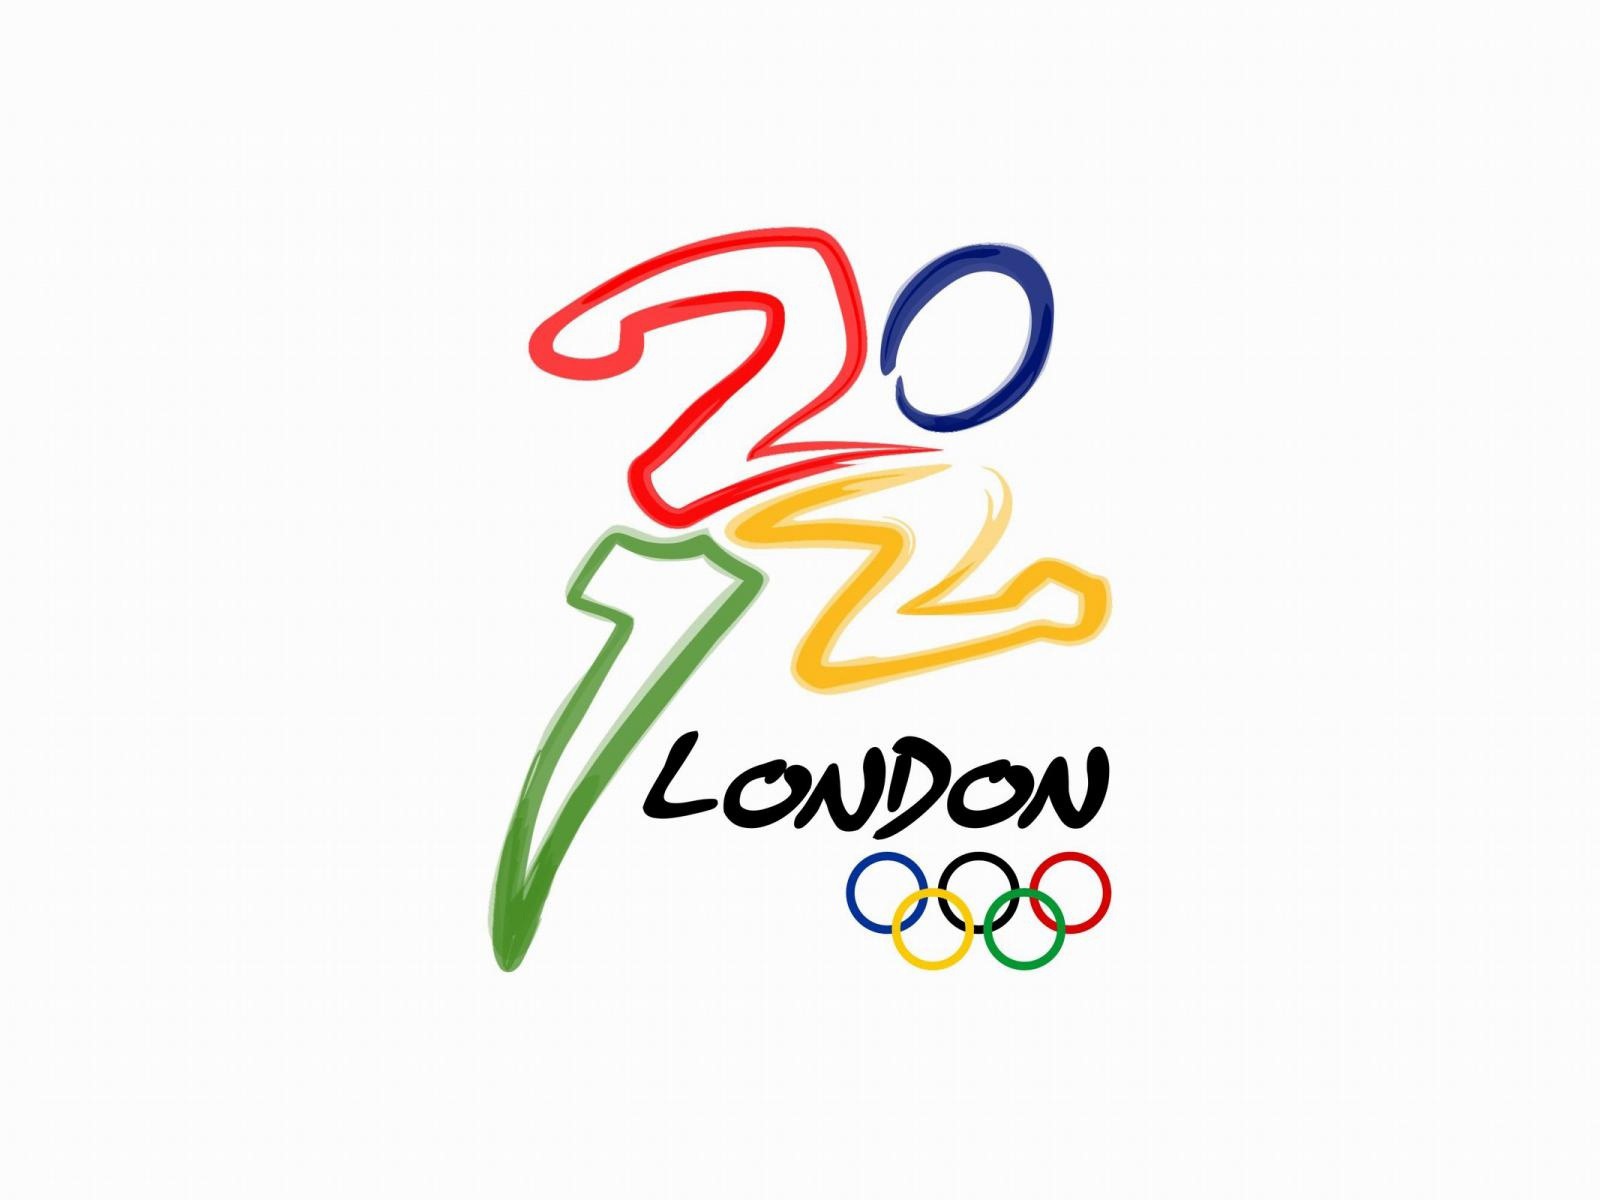 London 2012 Olympics Thema Wallpaper (2) #22 - 1600x1200